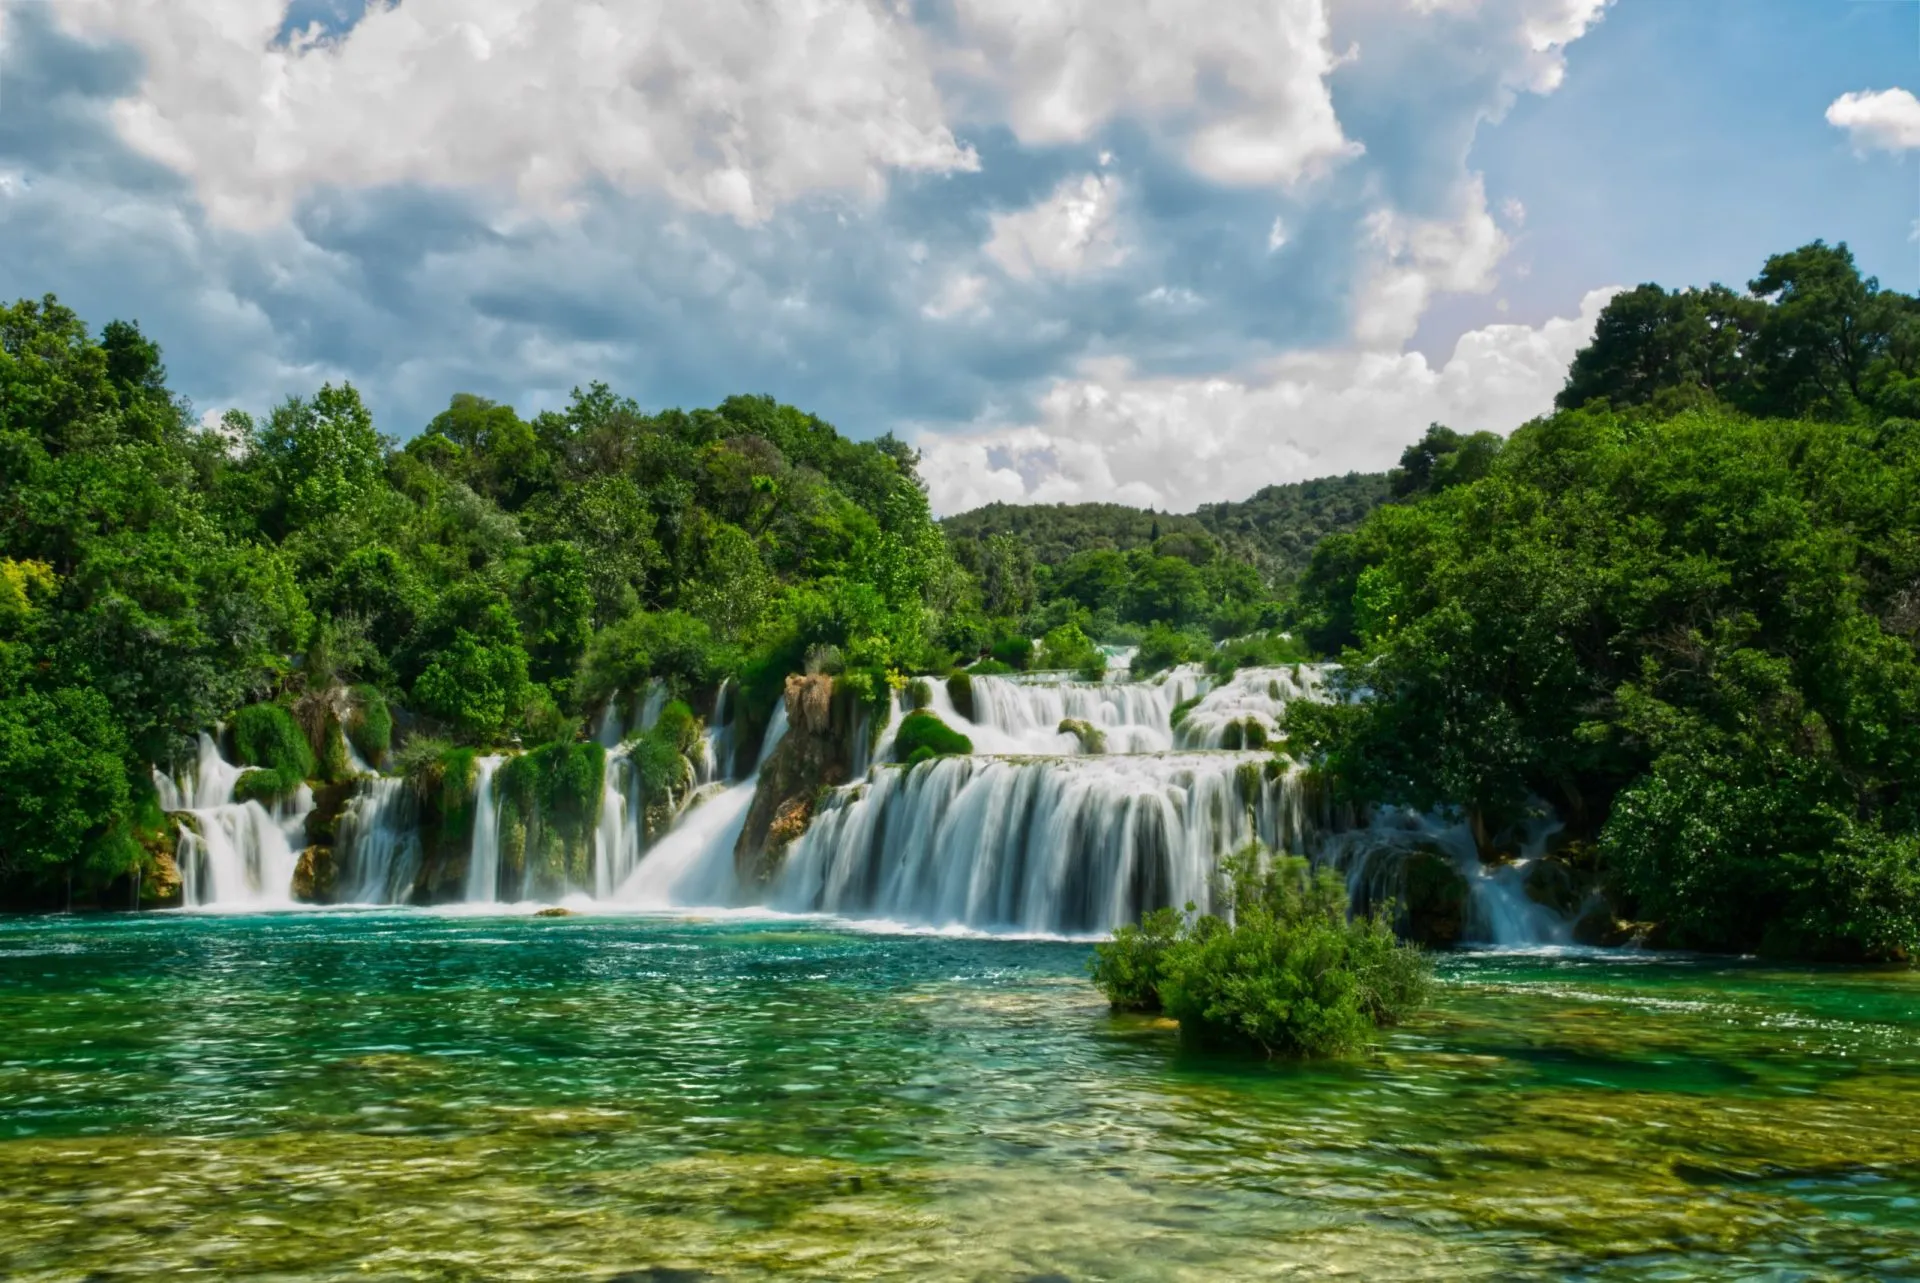 Waterfall “Skradinski Buk” in Krka National Park in Croatia, Europe, HDR